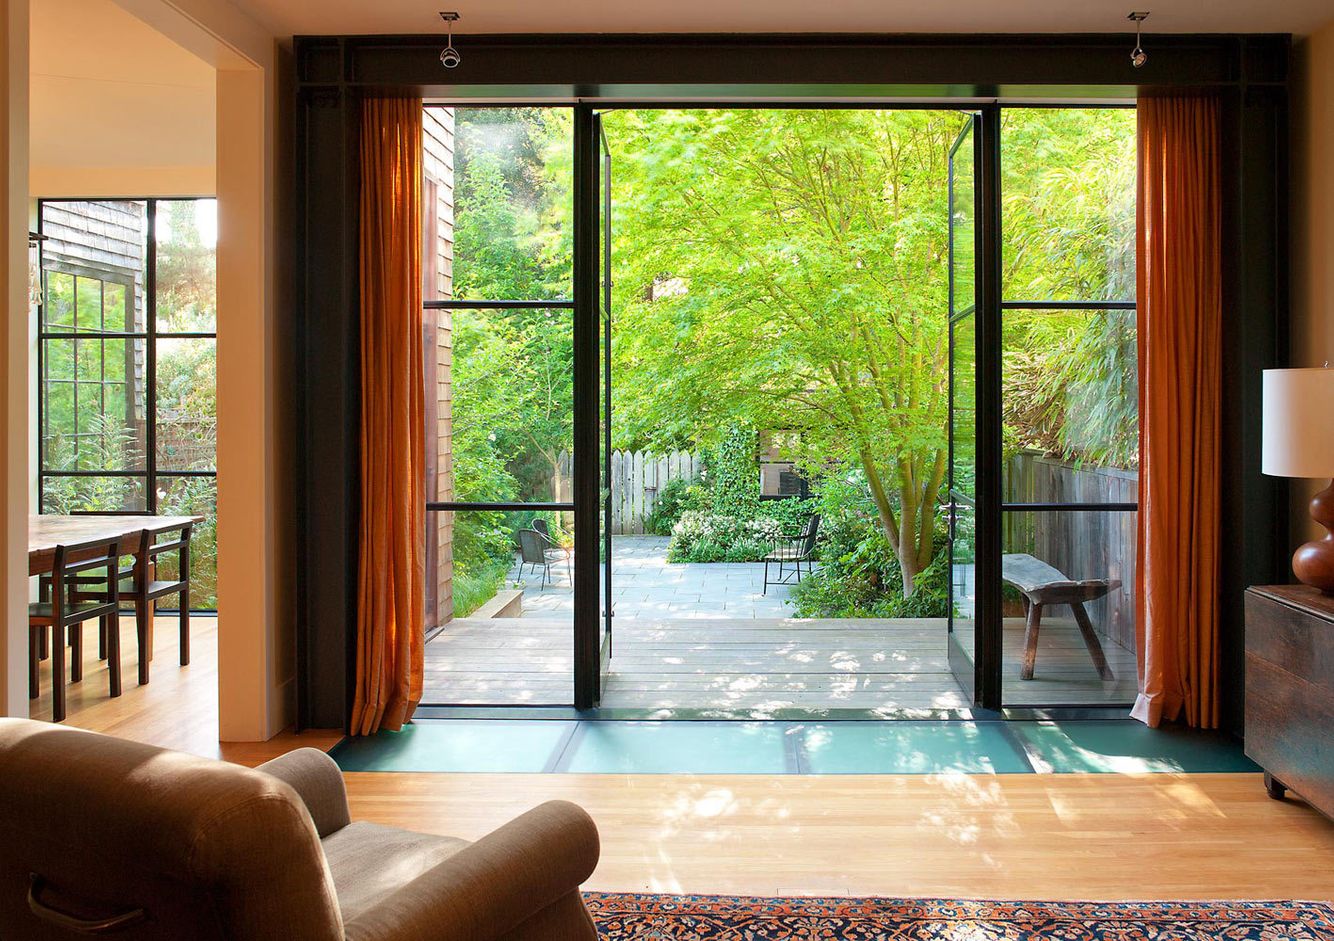 John-Sutton-Photography-Livingroom with a Garden View